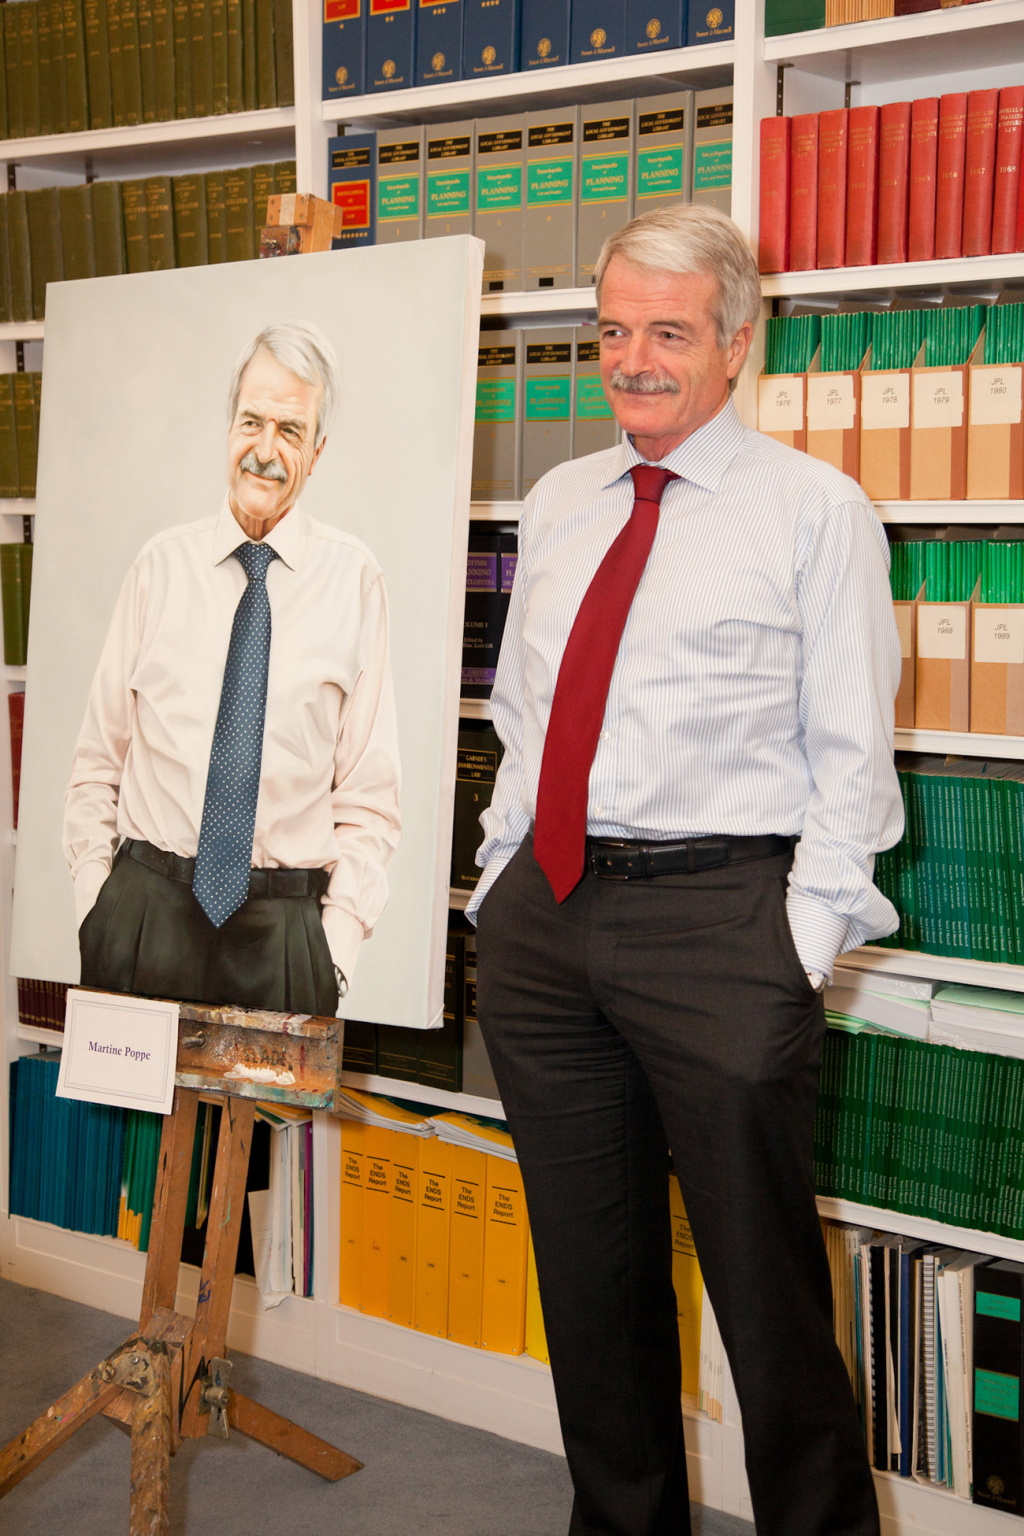 Professor Malcolm Grant with Martine Poppe's winning portrait